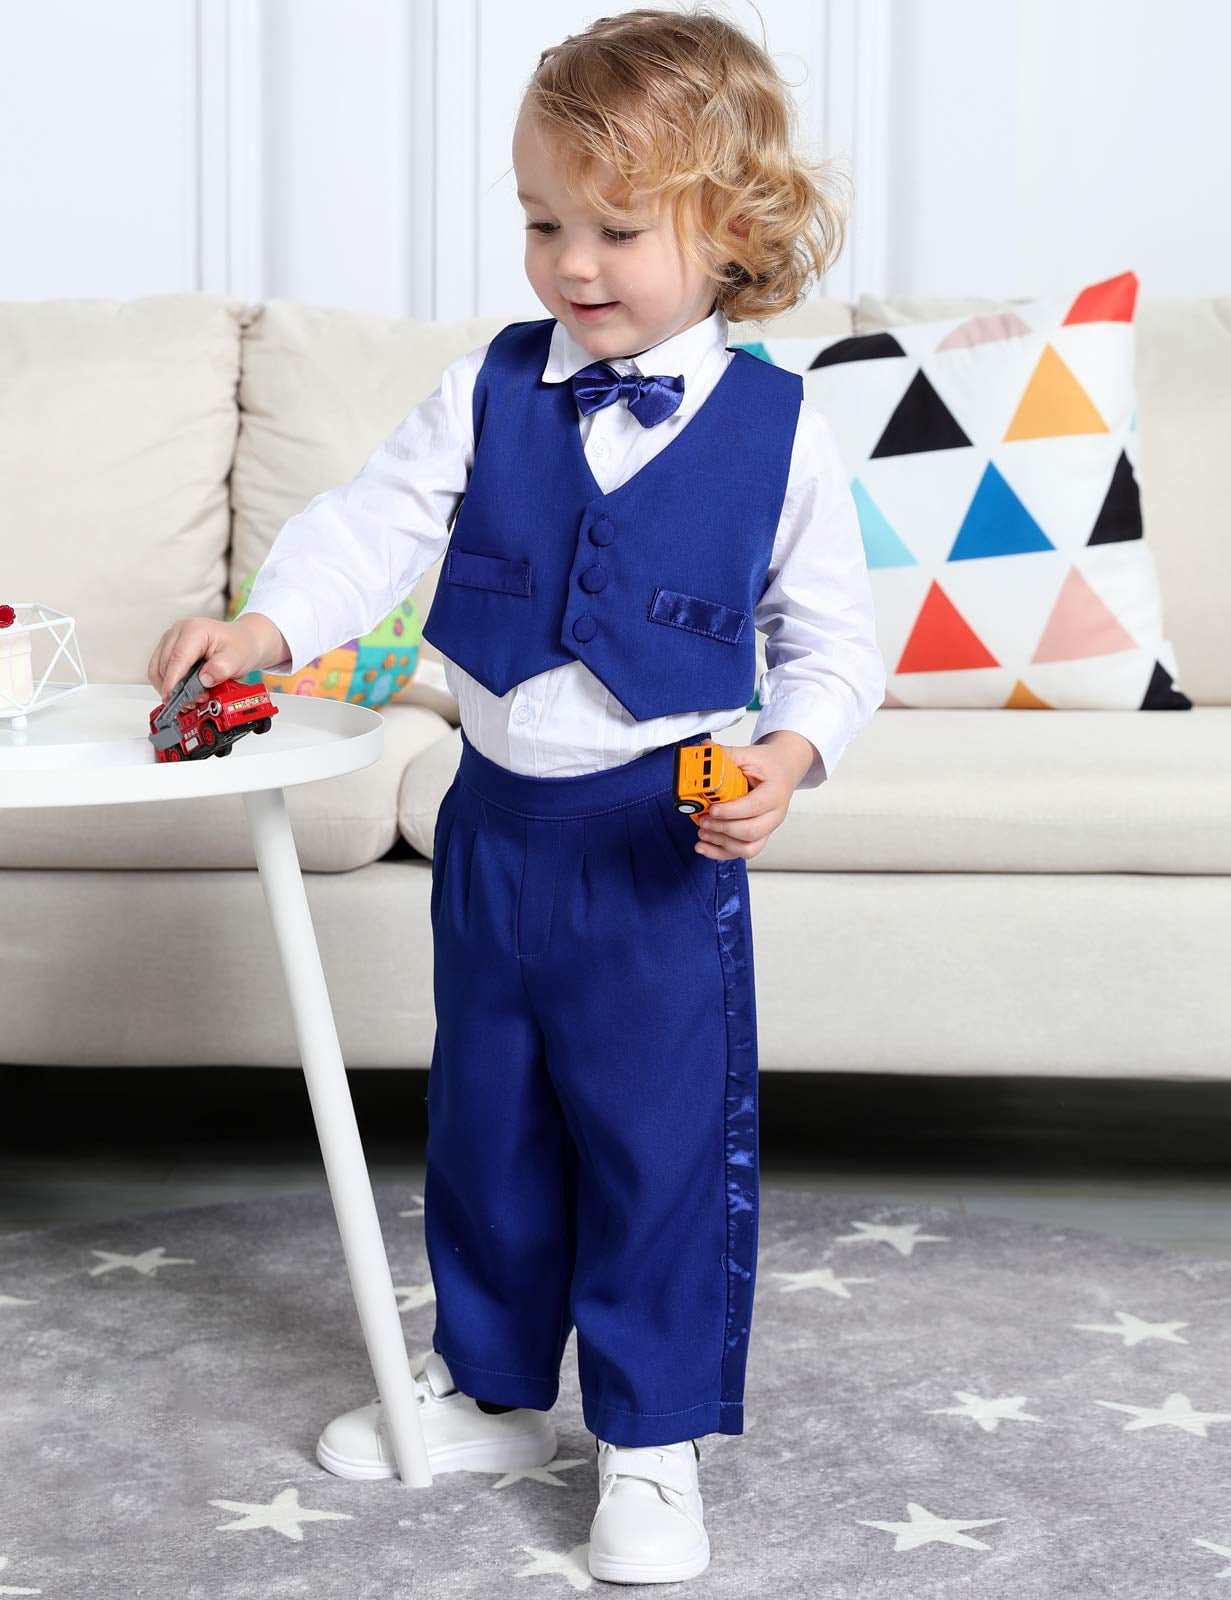 Child blazer formal tuxedo jacket design| Alibaba.com